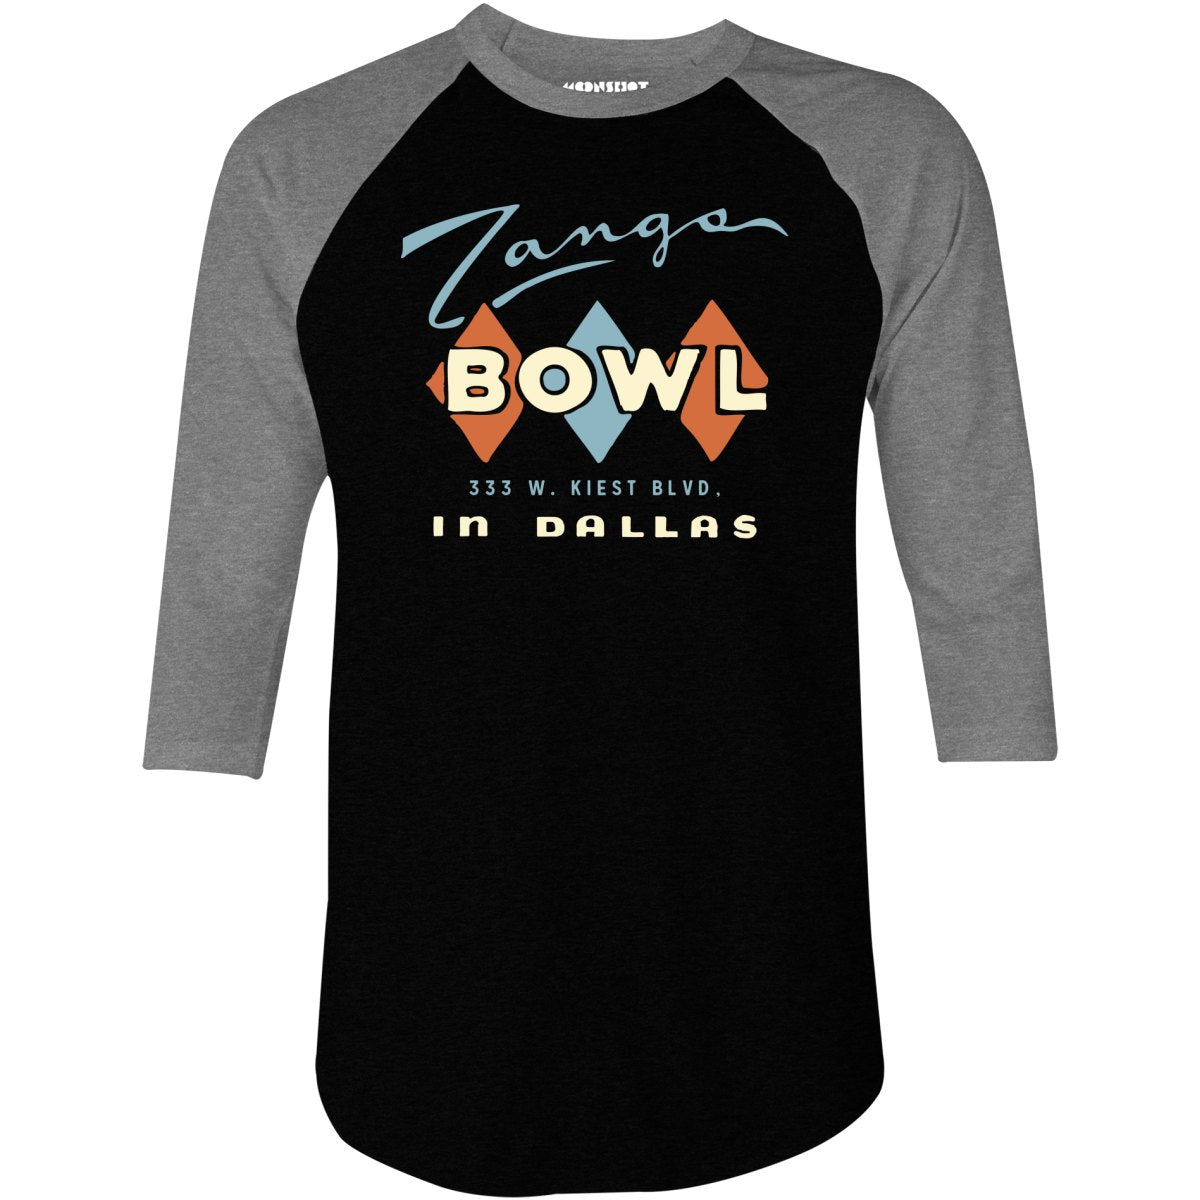 Zangs Bowl - Dallas, TX - Vintage Bowling Alley - 3/4 Sleeve Raglan T-Shirt